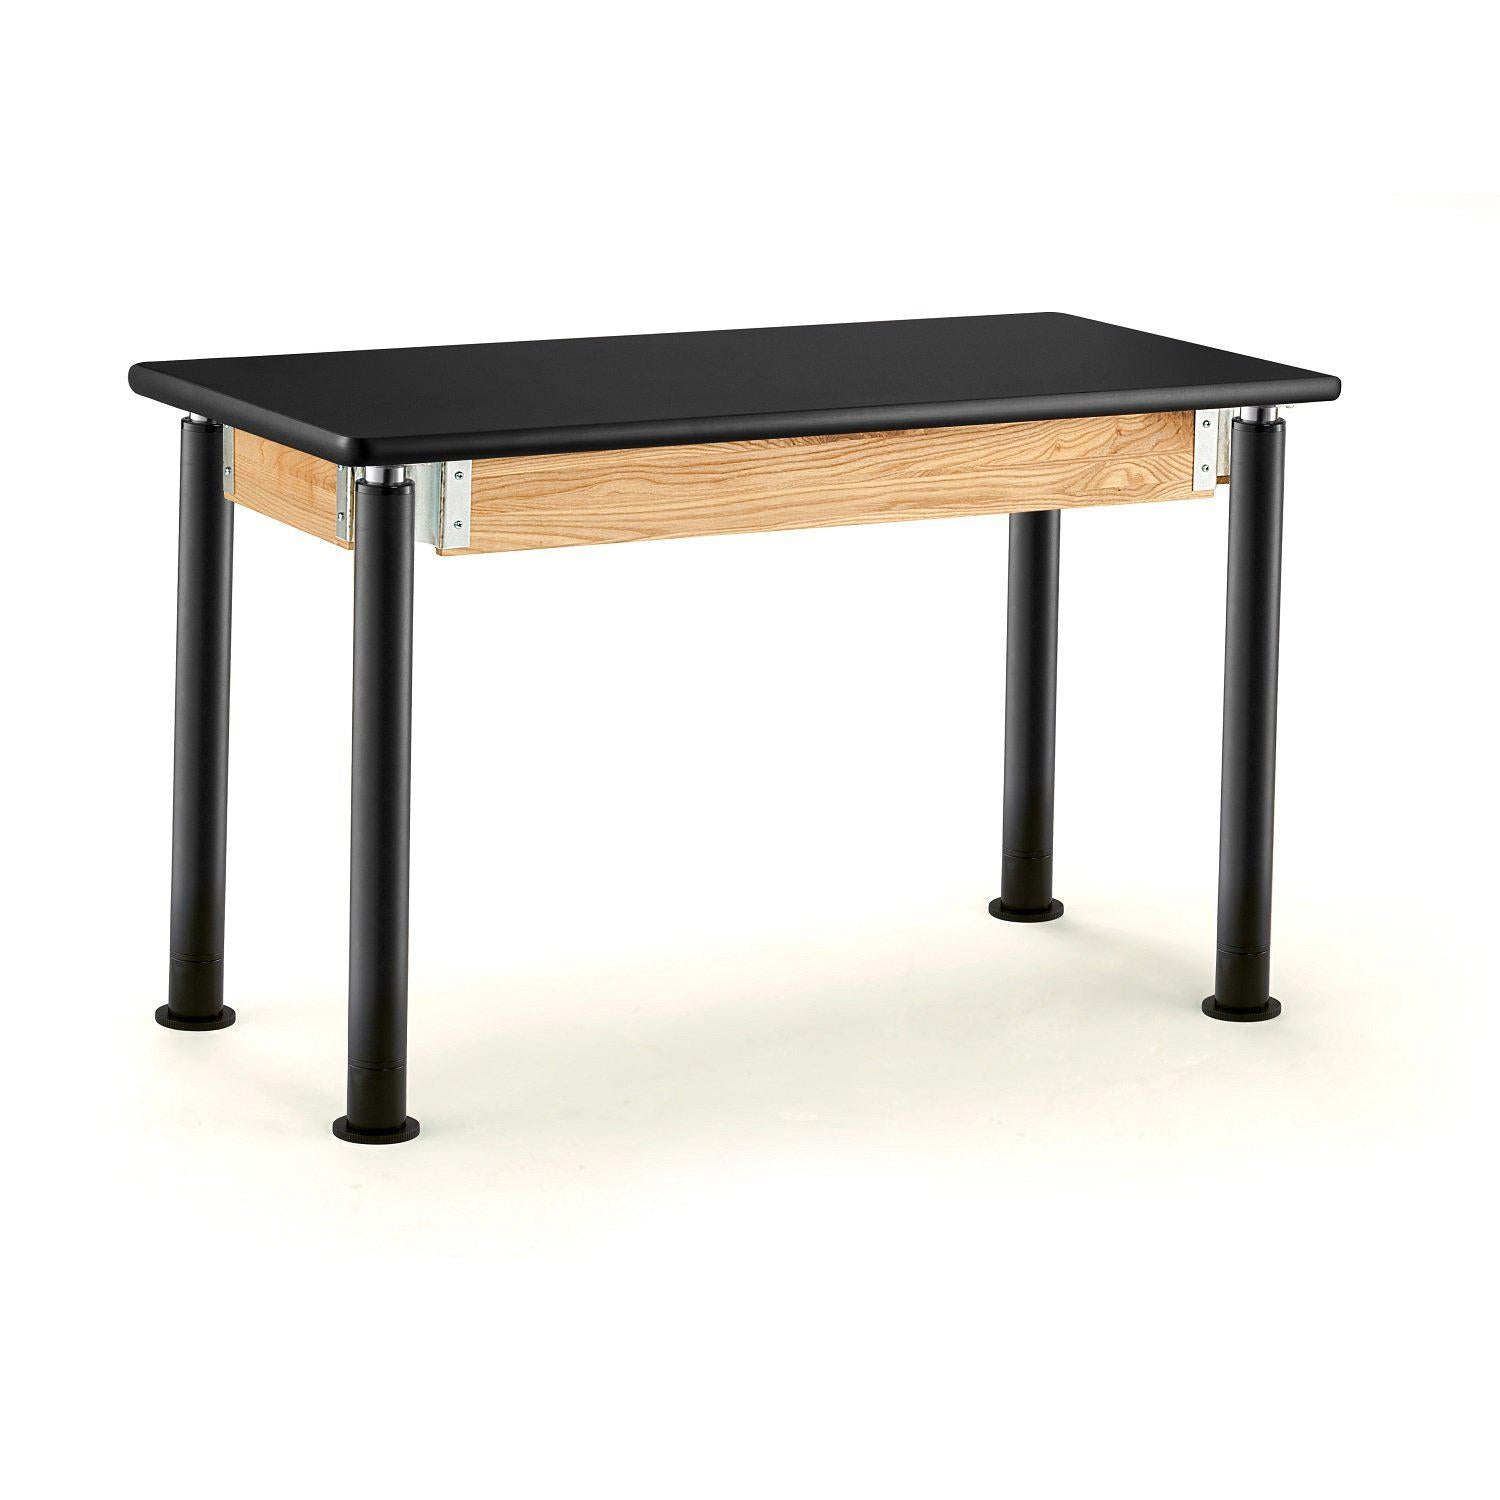 Signature Series Adjustable Height Science Lab Table, Textured Black Legs, 24"x54", Black High Pressure Laminate Top